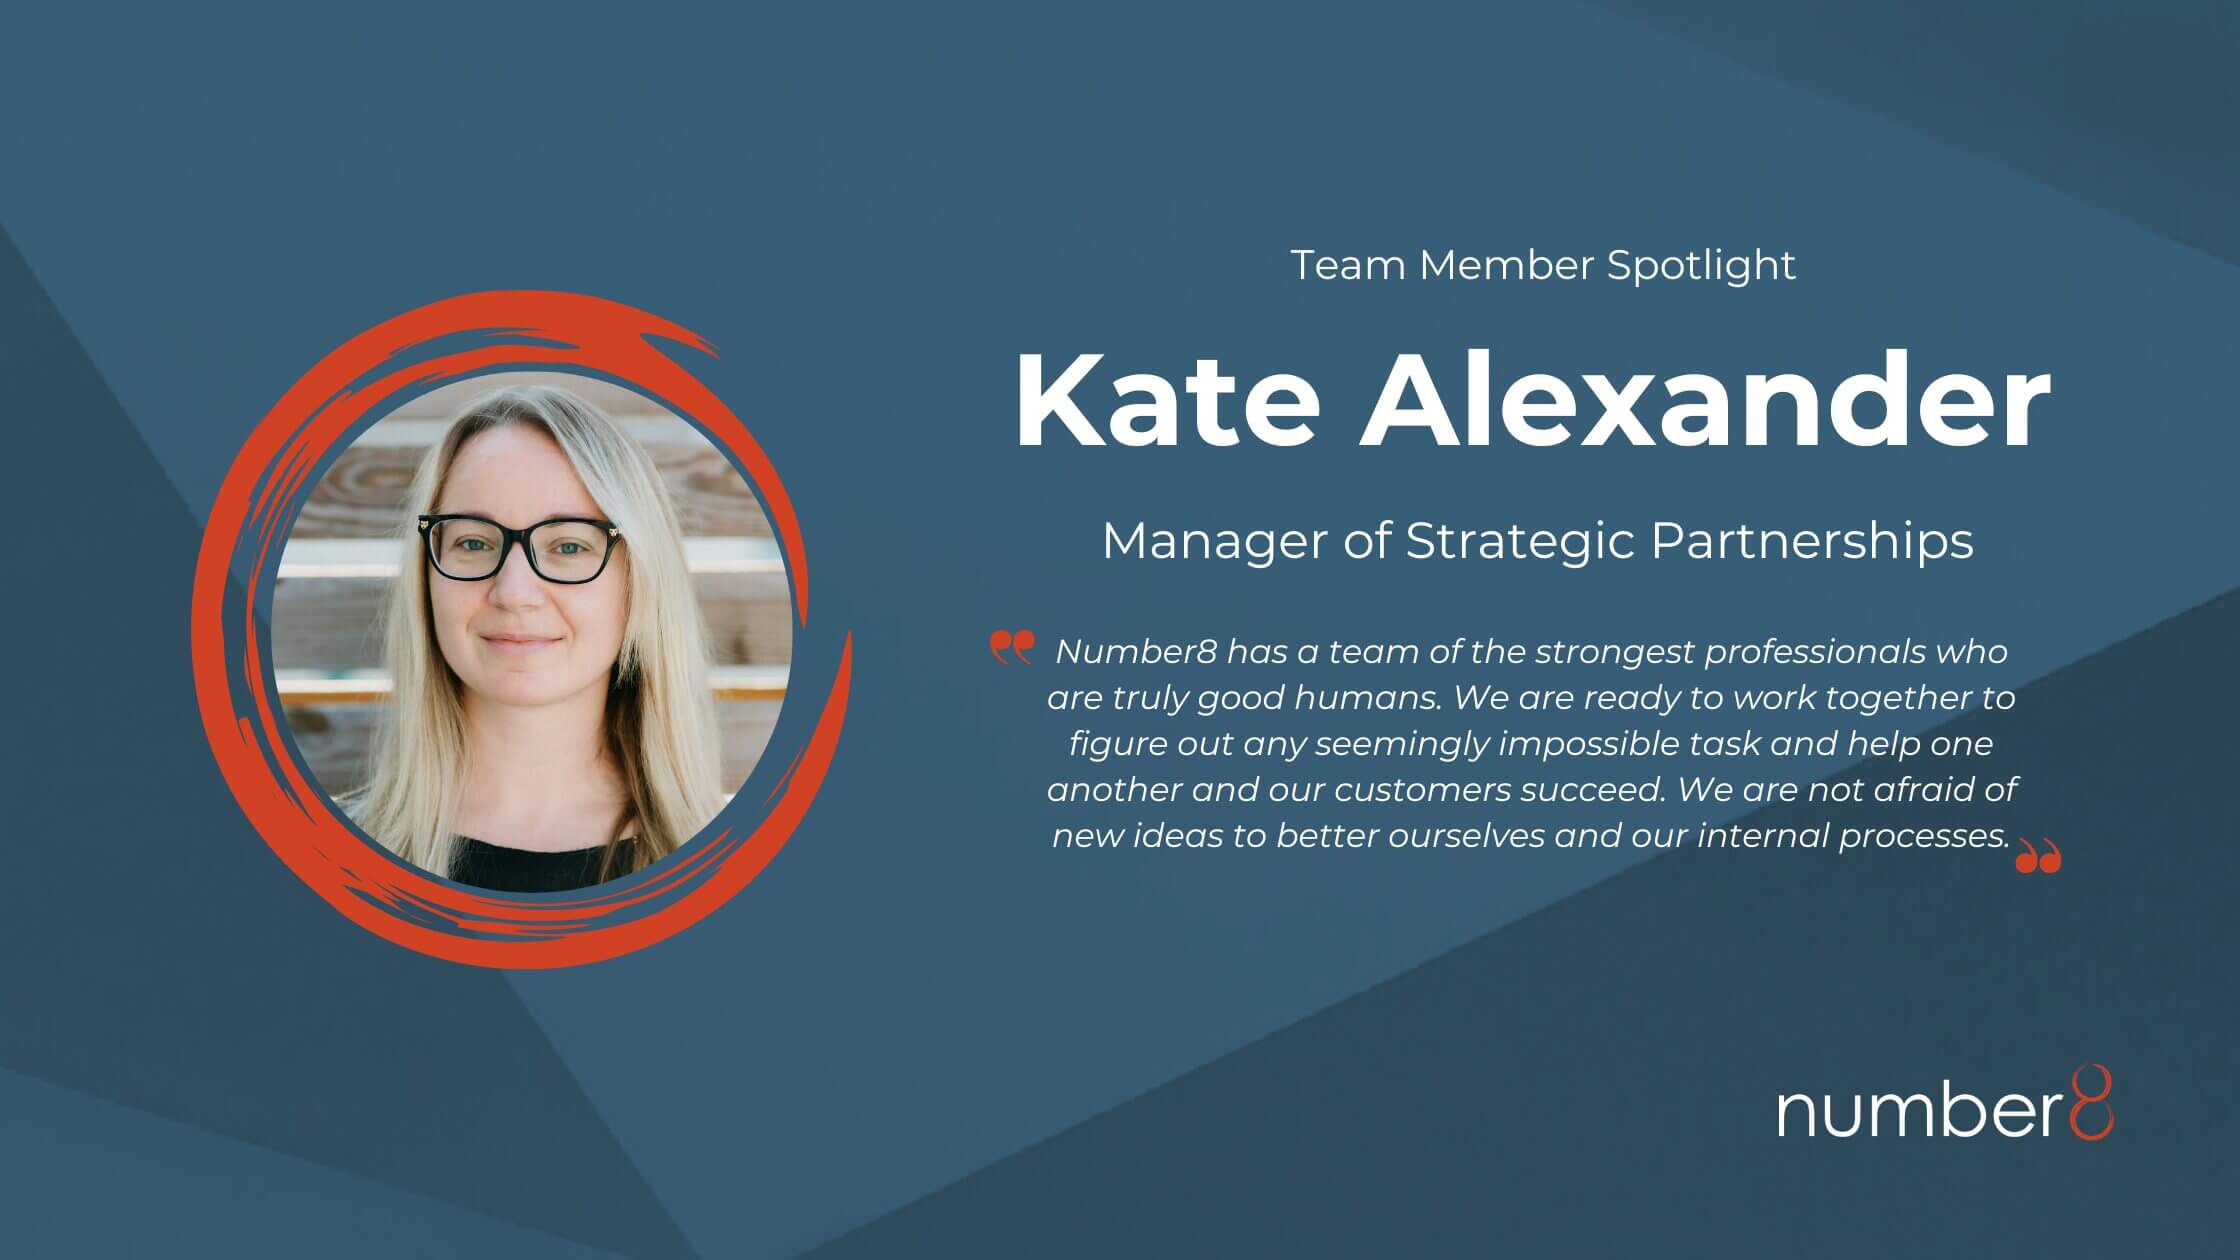 Meet Kate - Manager of Strategic Partnerships